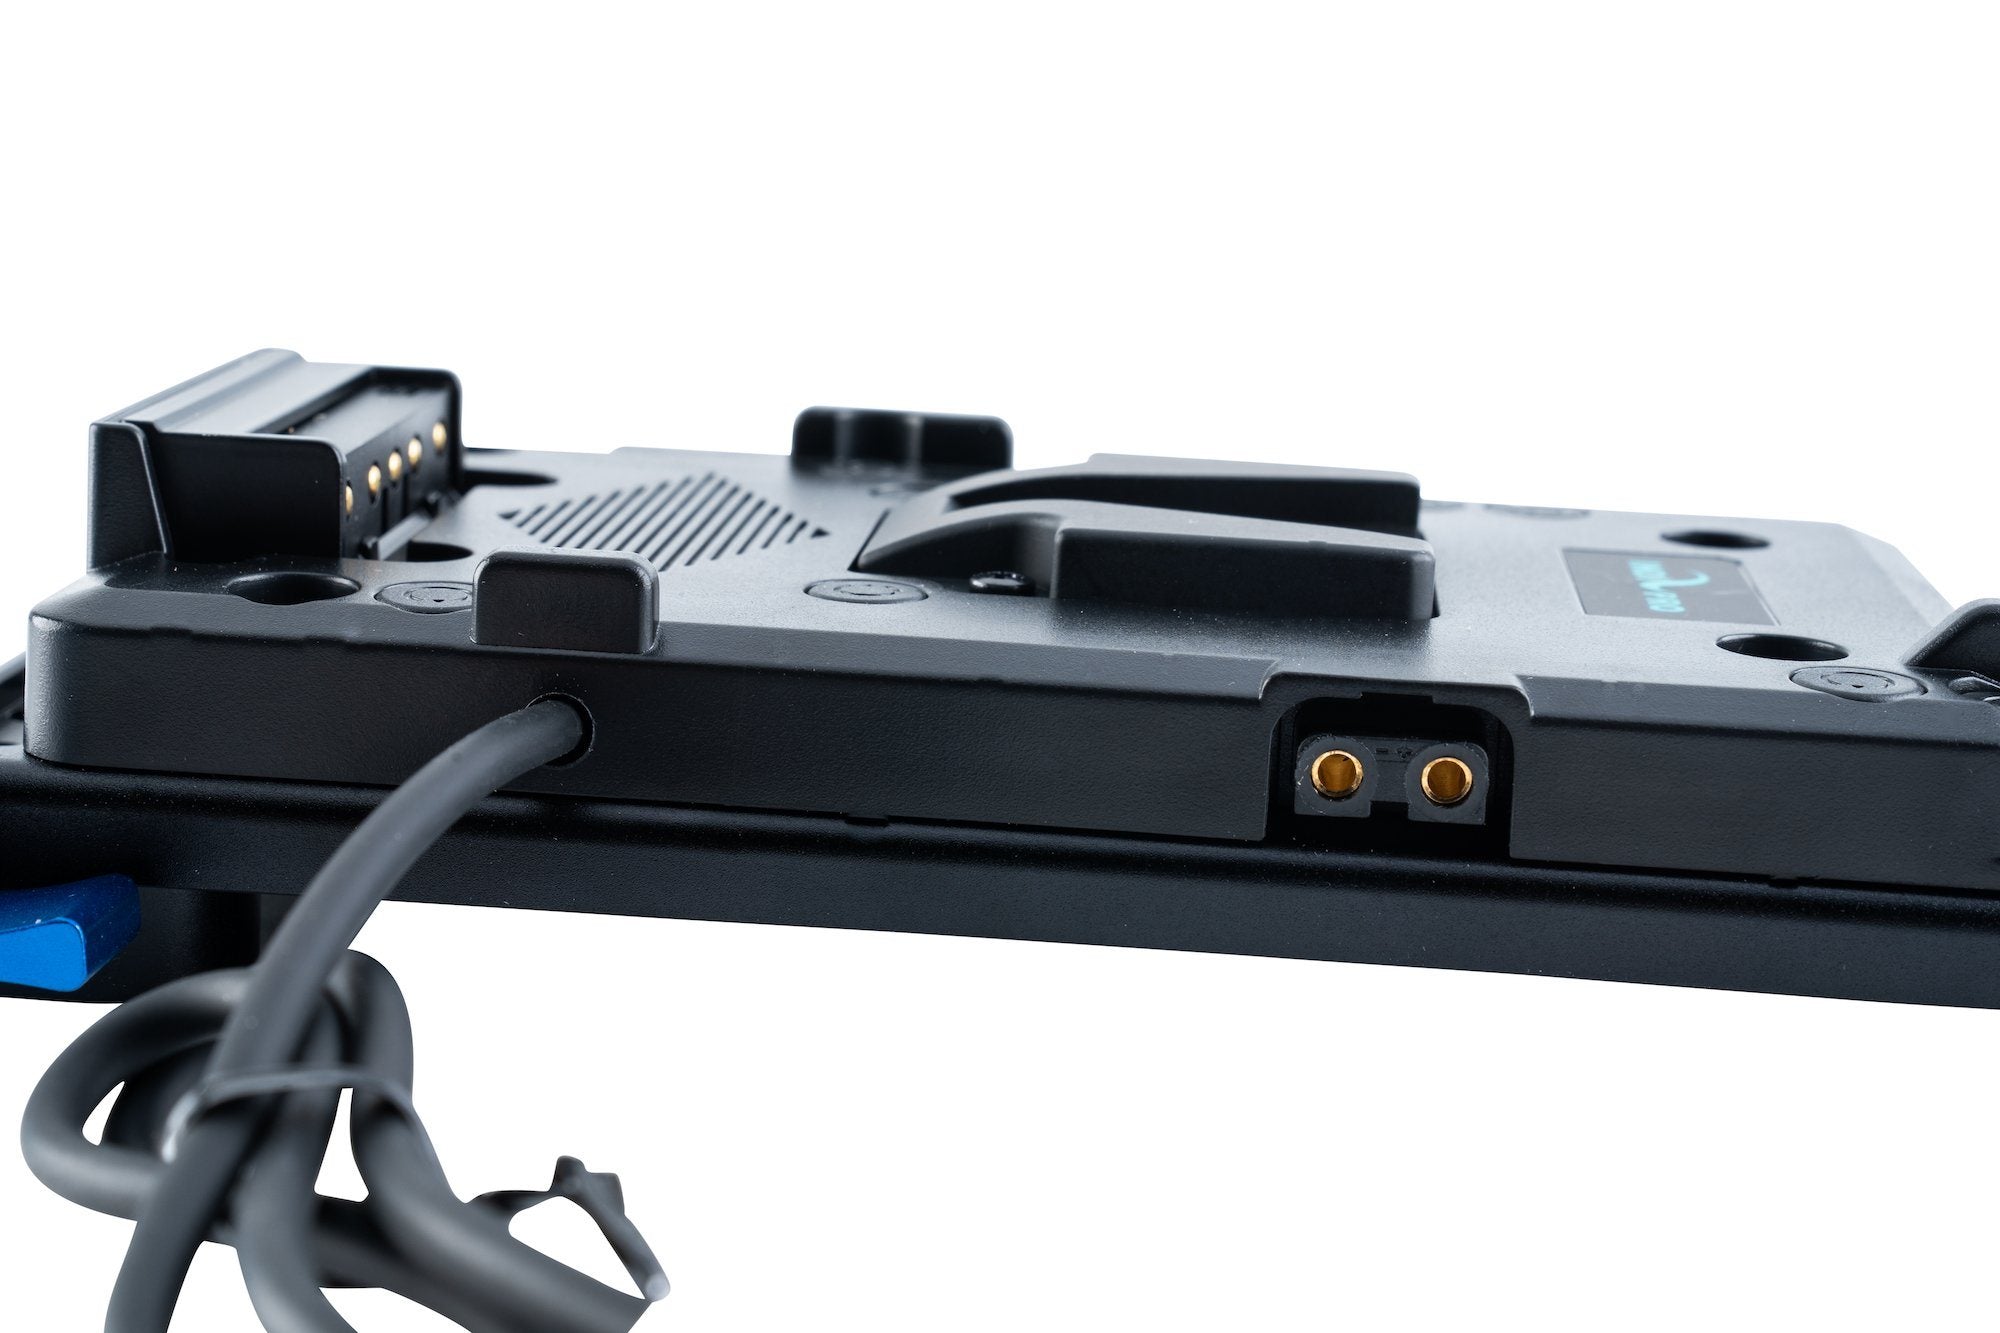 V-Mount Battery Adapter Plate for Blackmagic 4K Cinema Camera w/ 15mm Rod System (24") Cinema & Production Camera 4K Indipro 